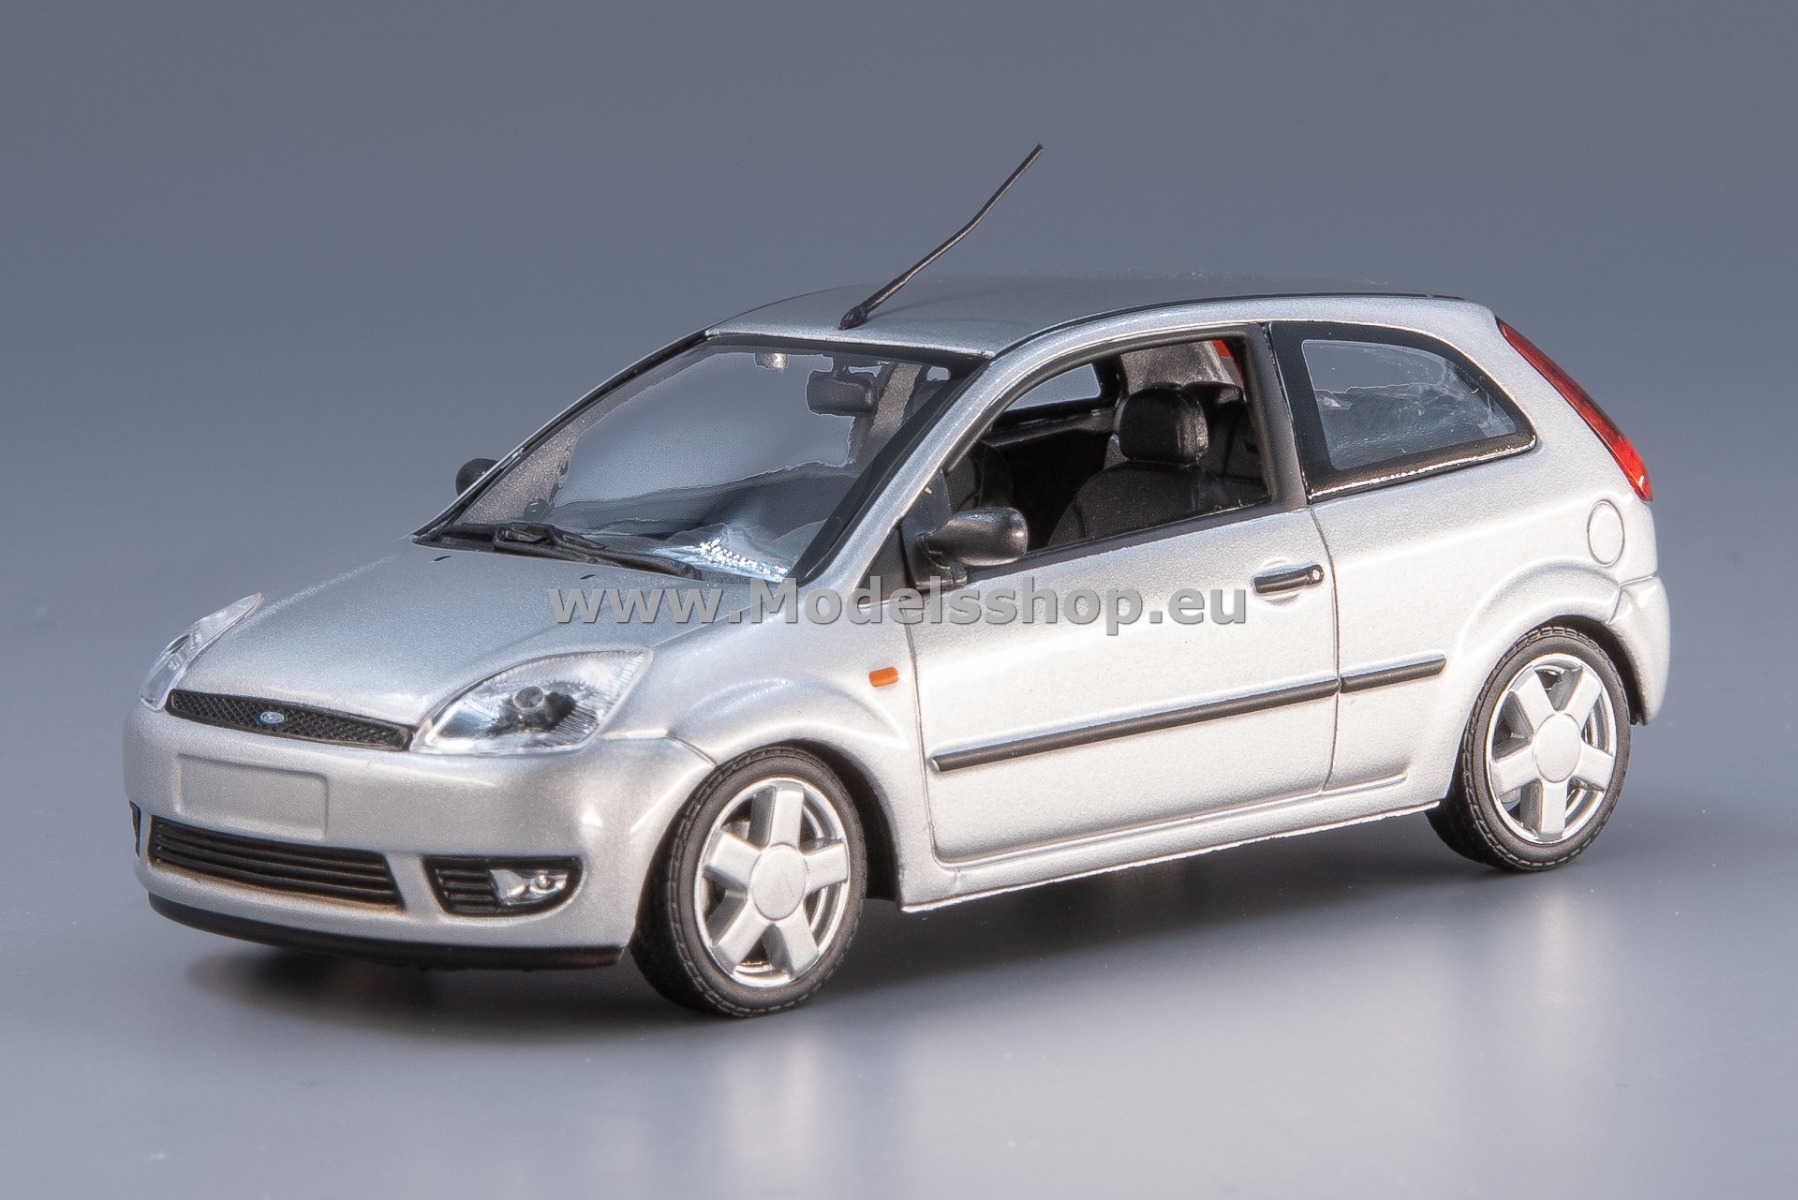 Maxichamps 940081120 Ford Fiesta 3d, 2002 /silver/